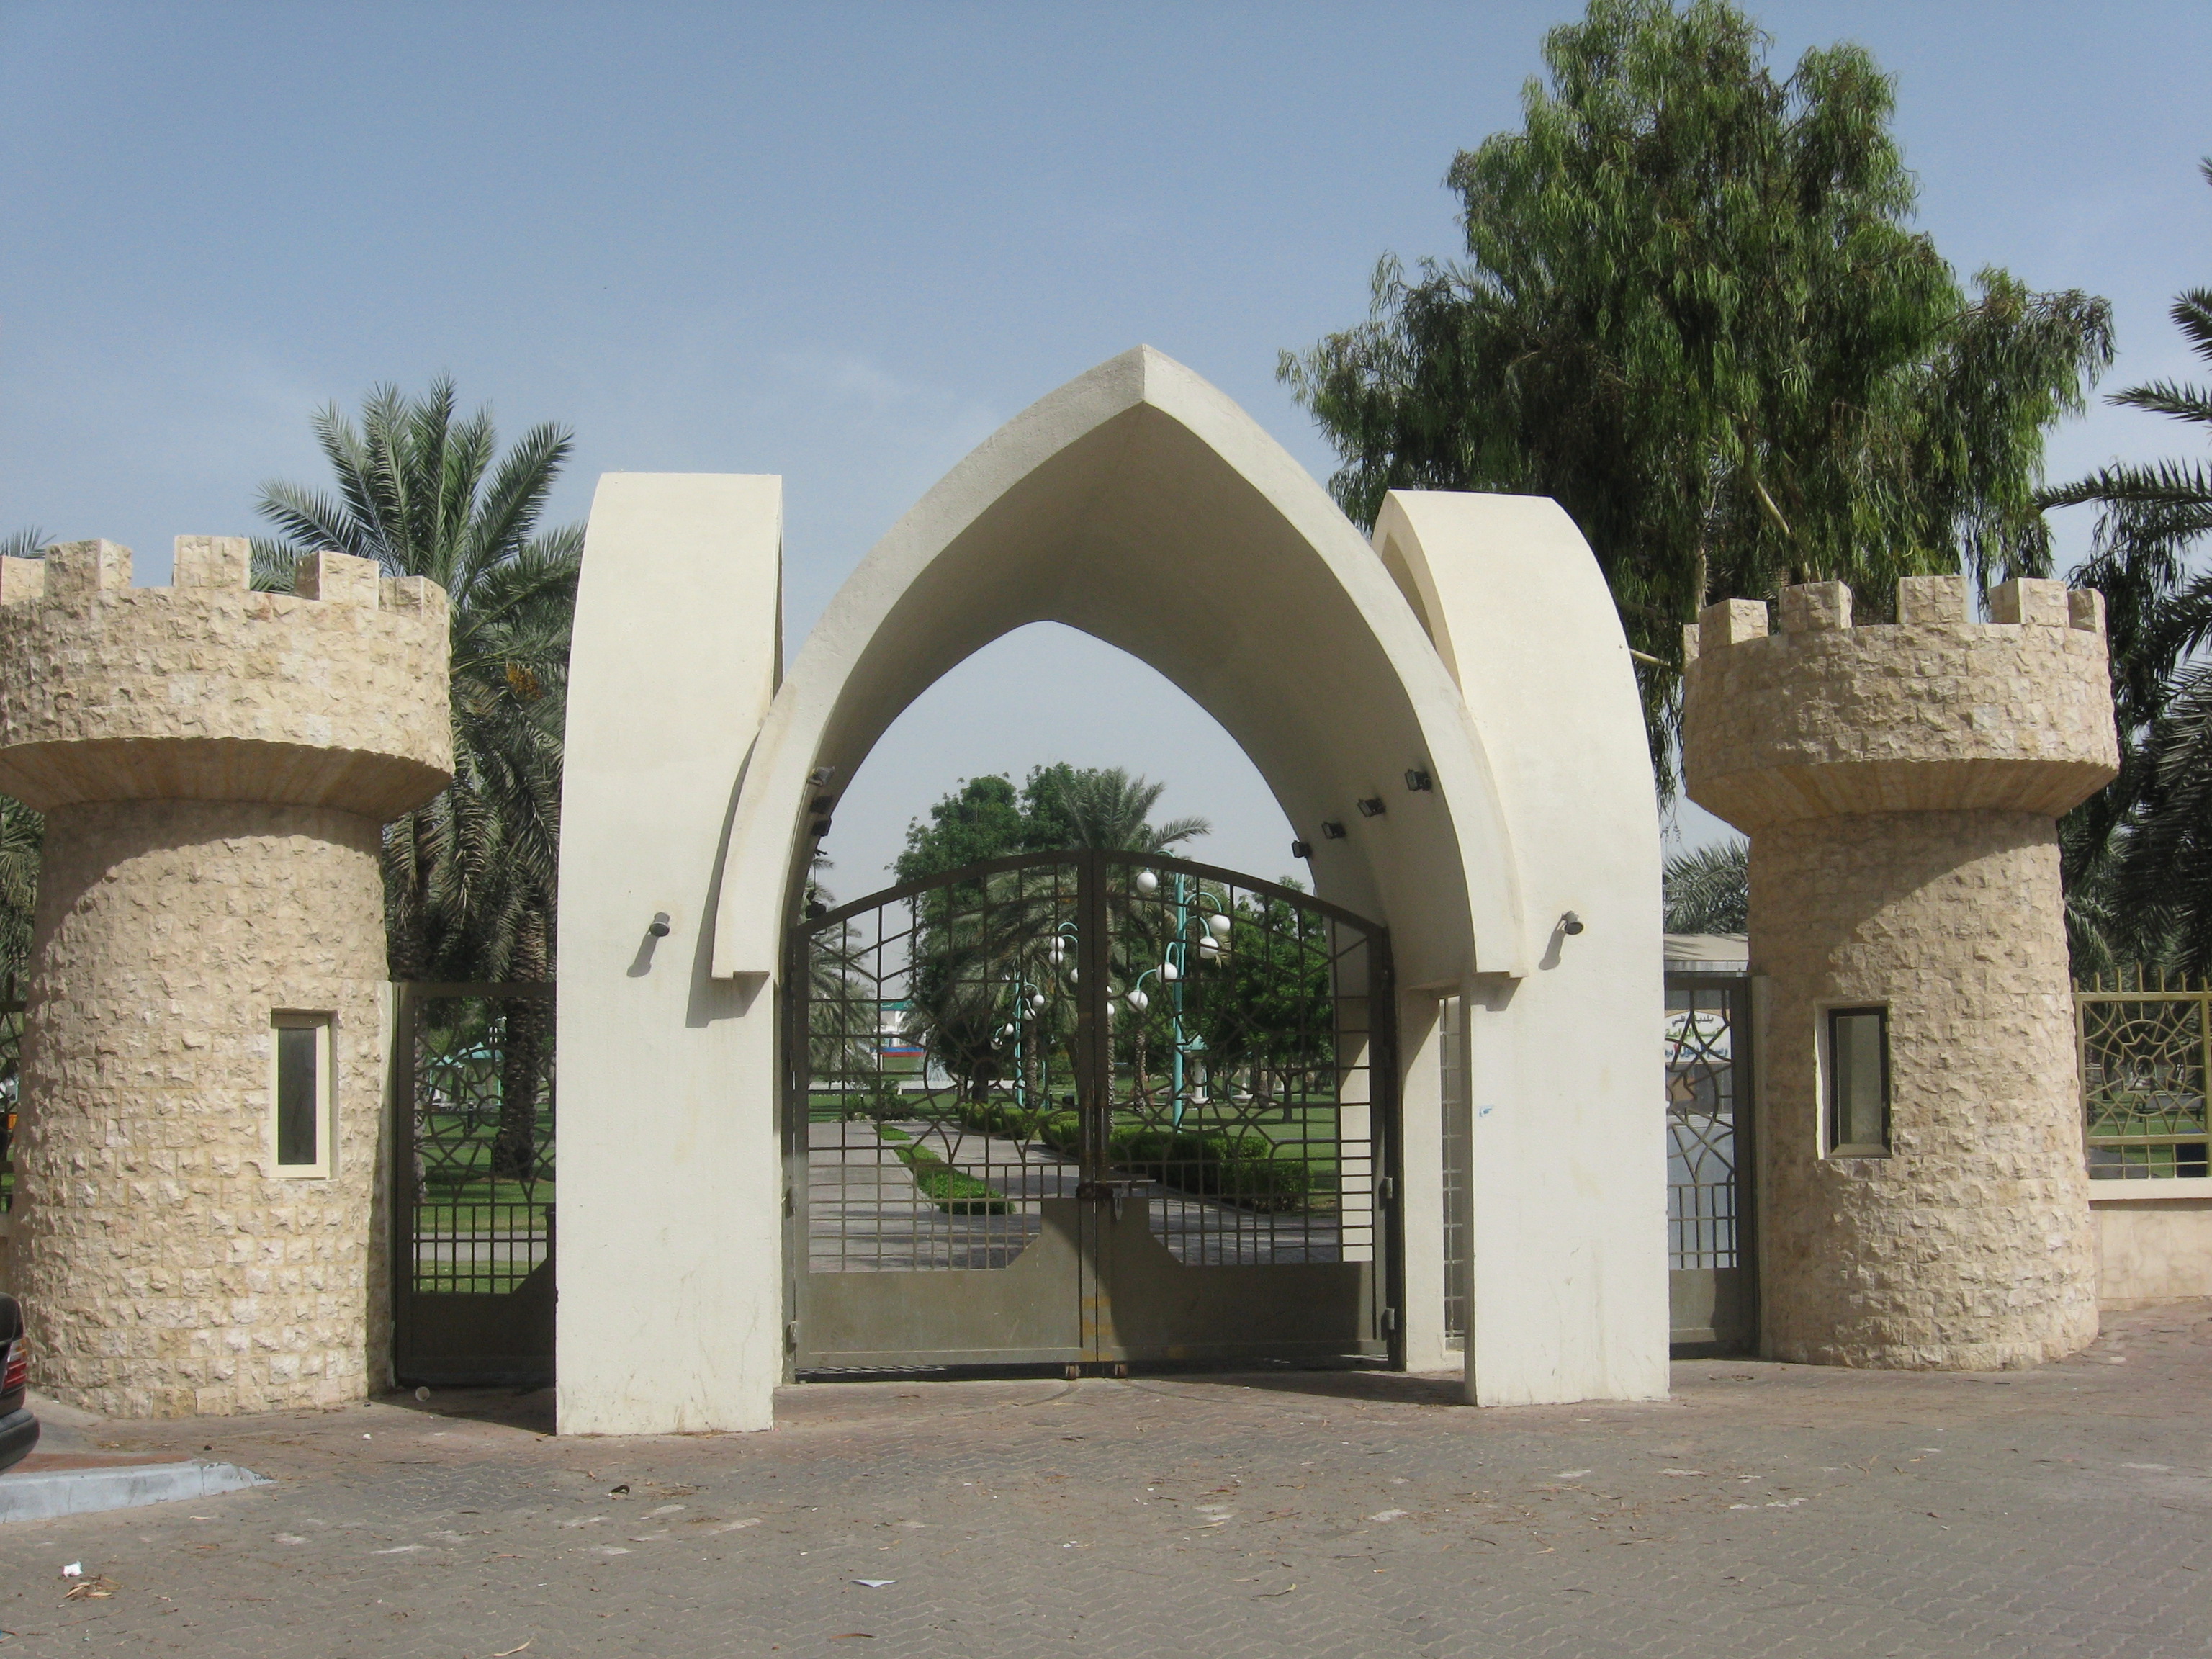 File:Park entrance in Abu Dhabi 01 977.JPG - Wikimedia Commons